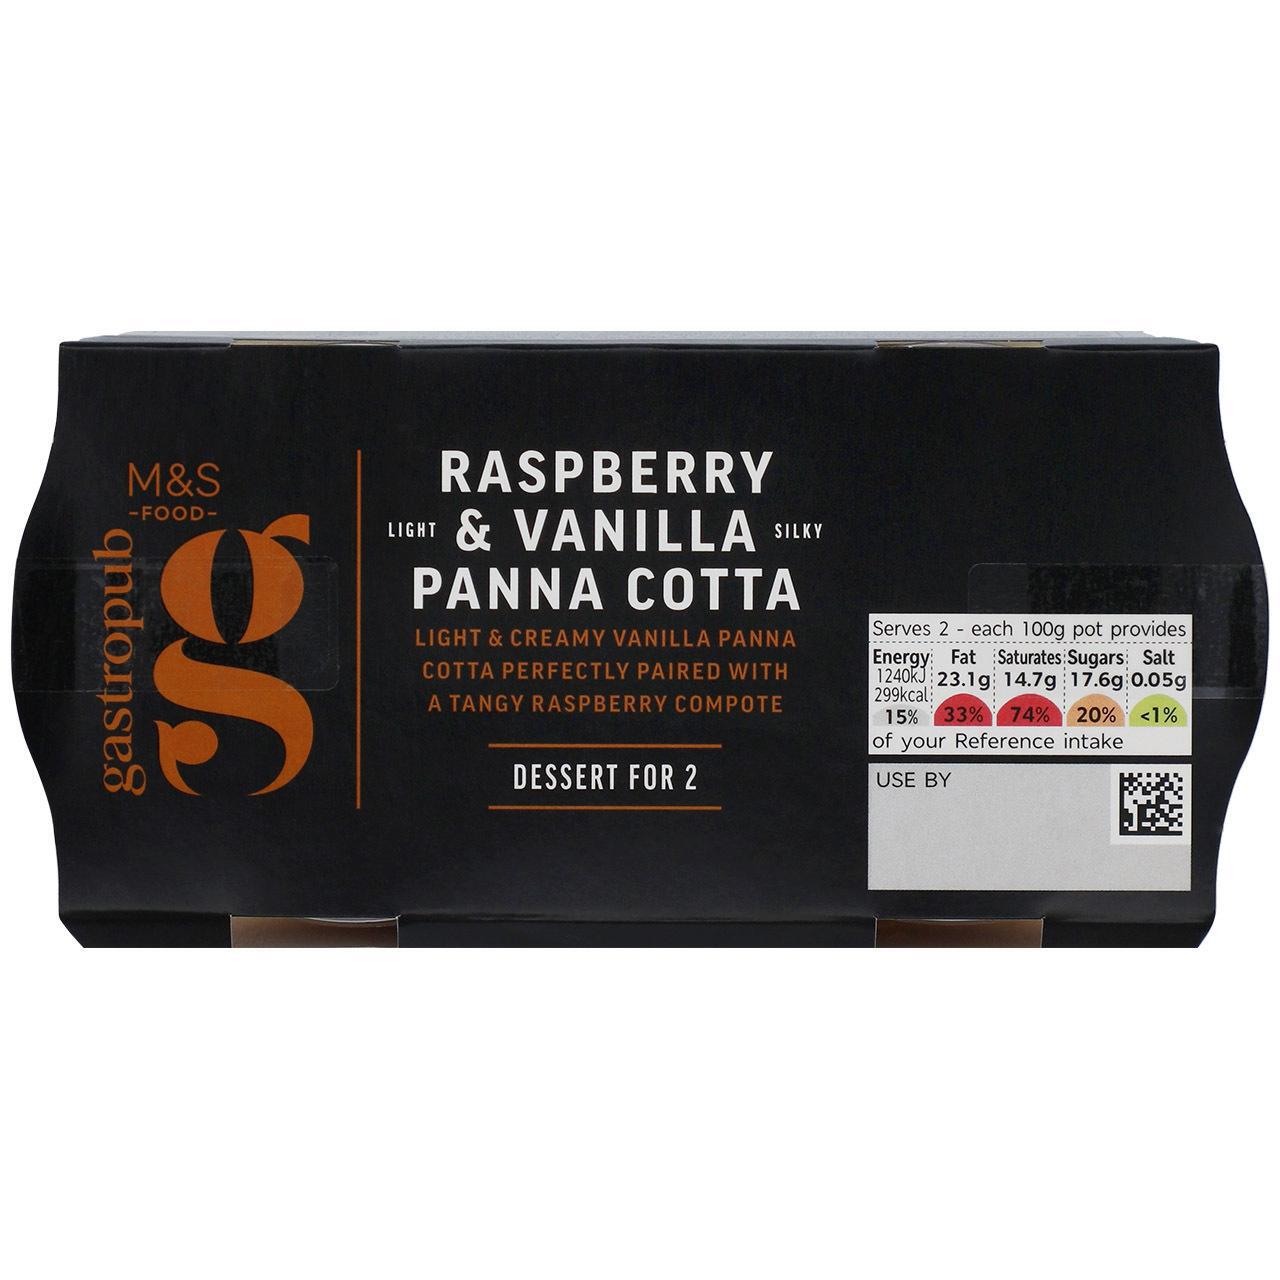 M&S Gastropub Raspberry & Vanilla Panna Cotta 200g